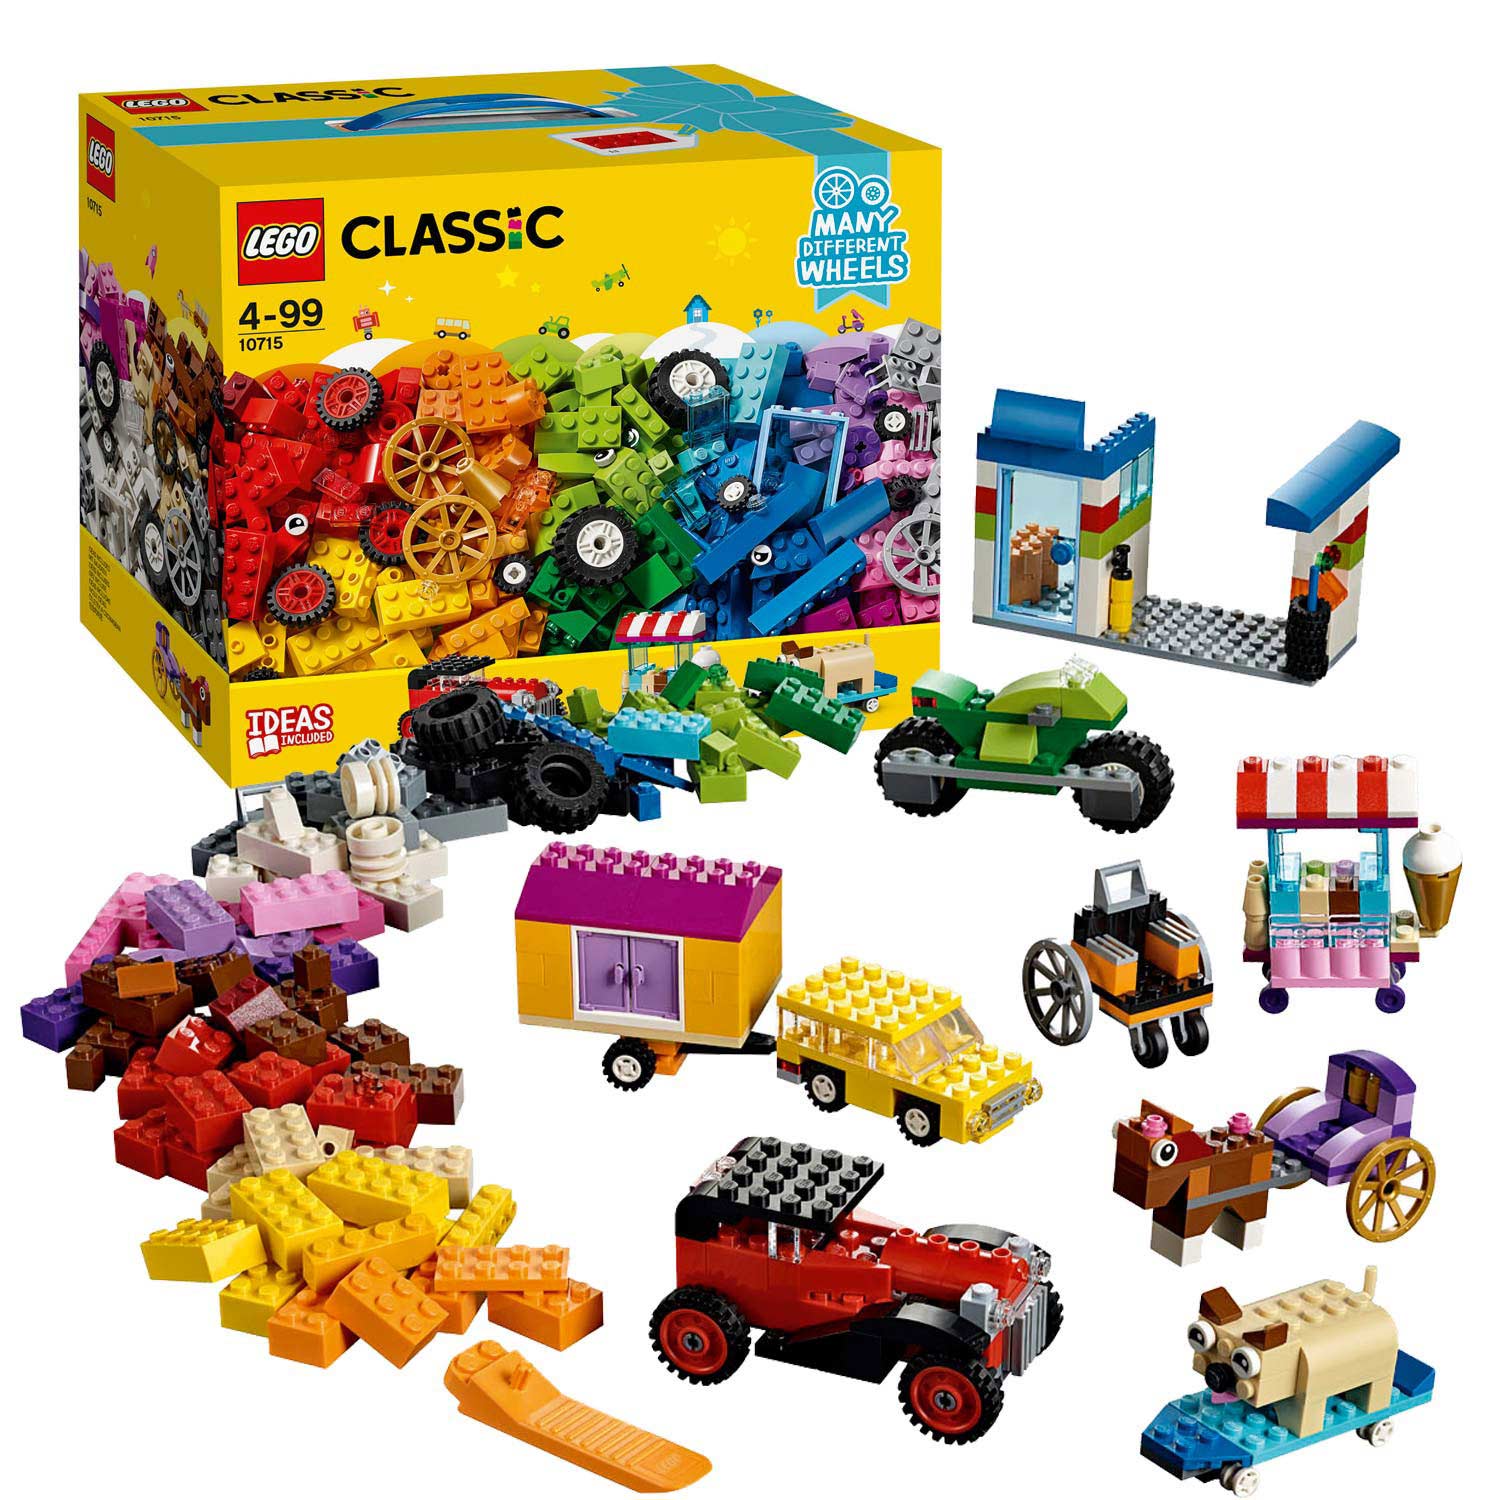 LEGO Classic 10715 on wheels | Thimble